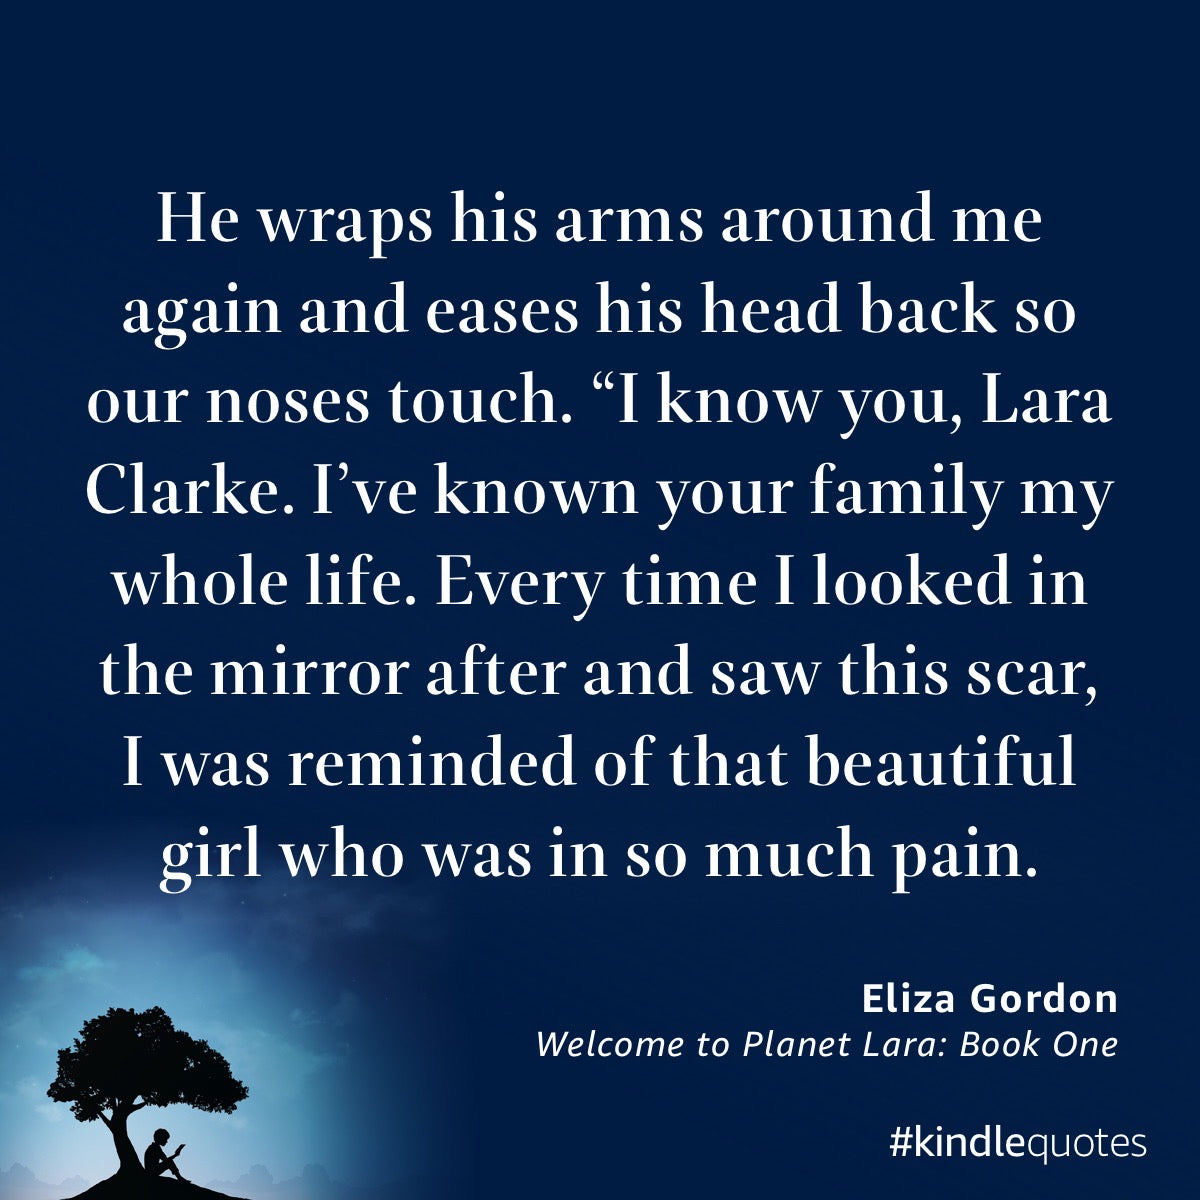 Welcome to Planet Lara, Book 1, by Eliza Gordon